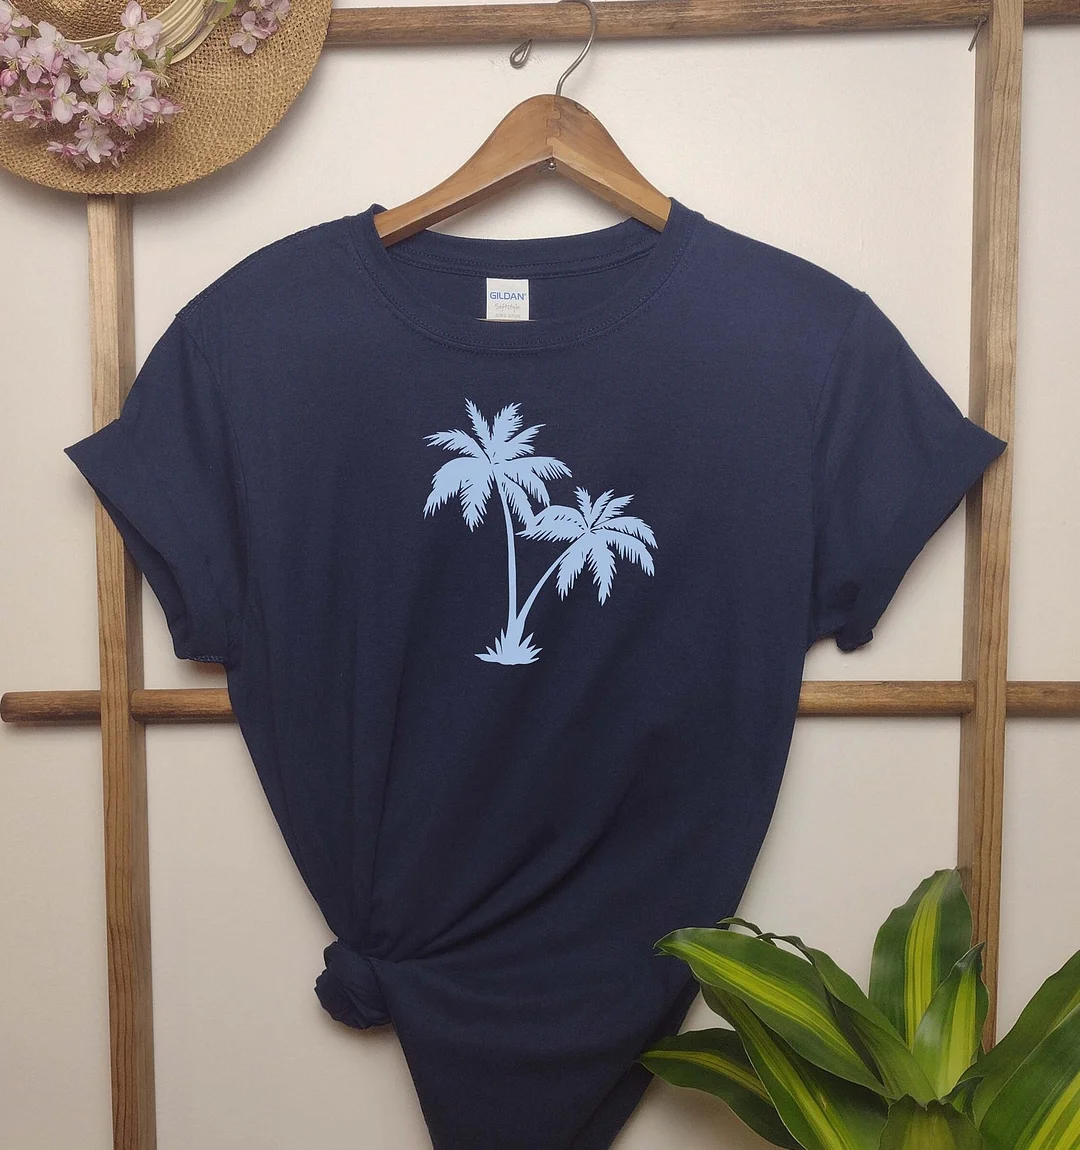 Palm Tree Shirt Summer T-Shirt Beach Mom Graphic Tee Unisex Shirts Outdoor Vacation Top